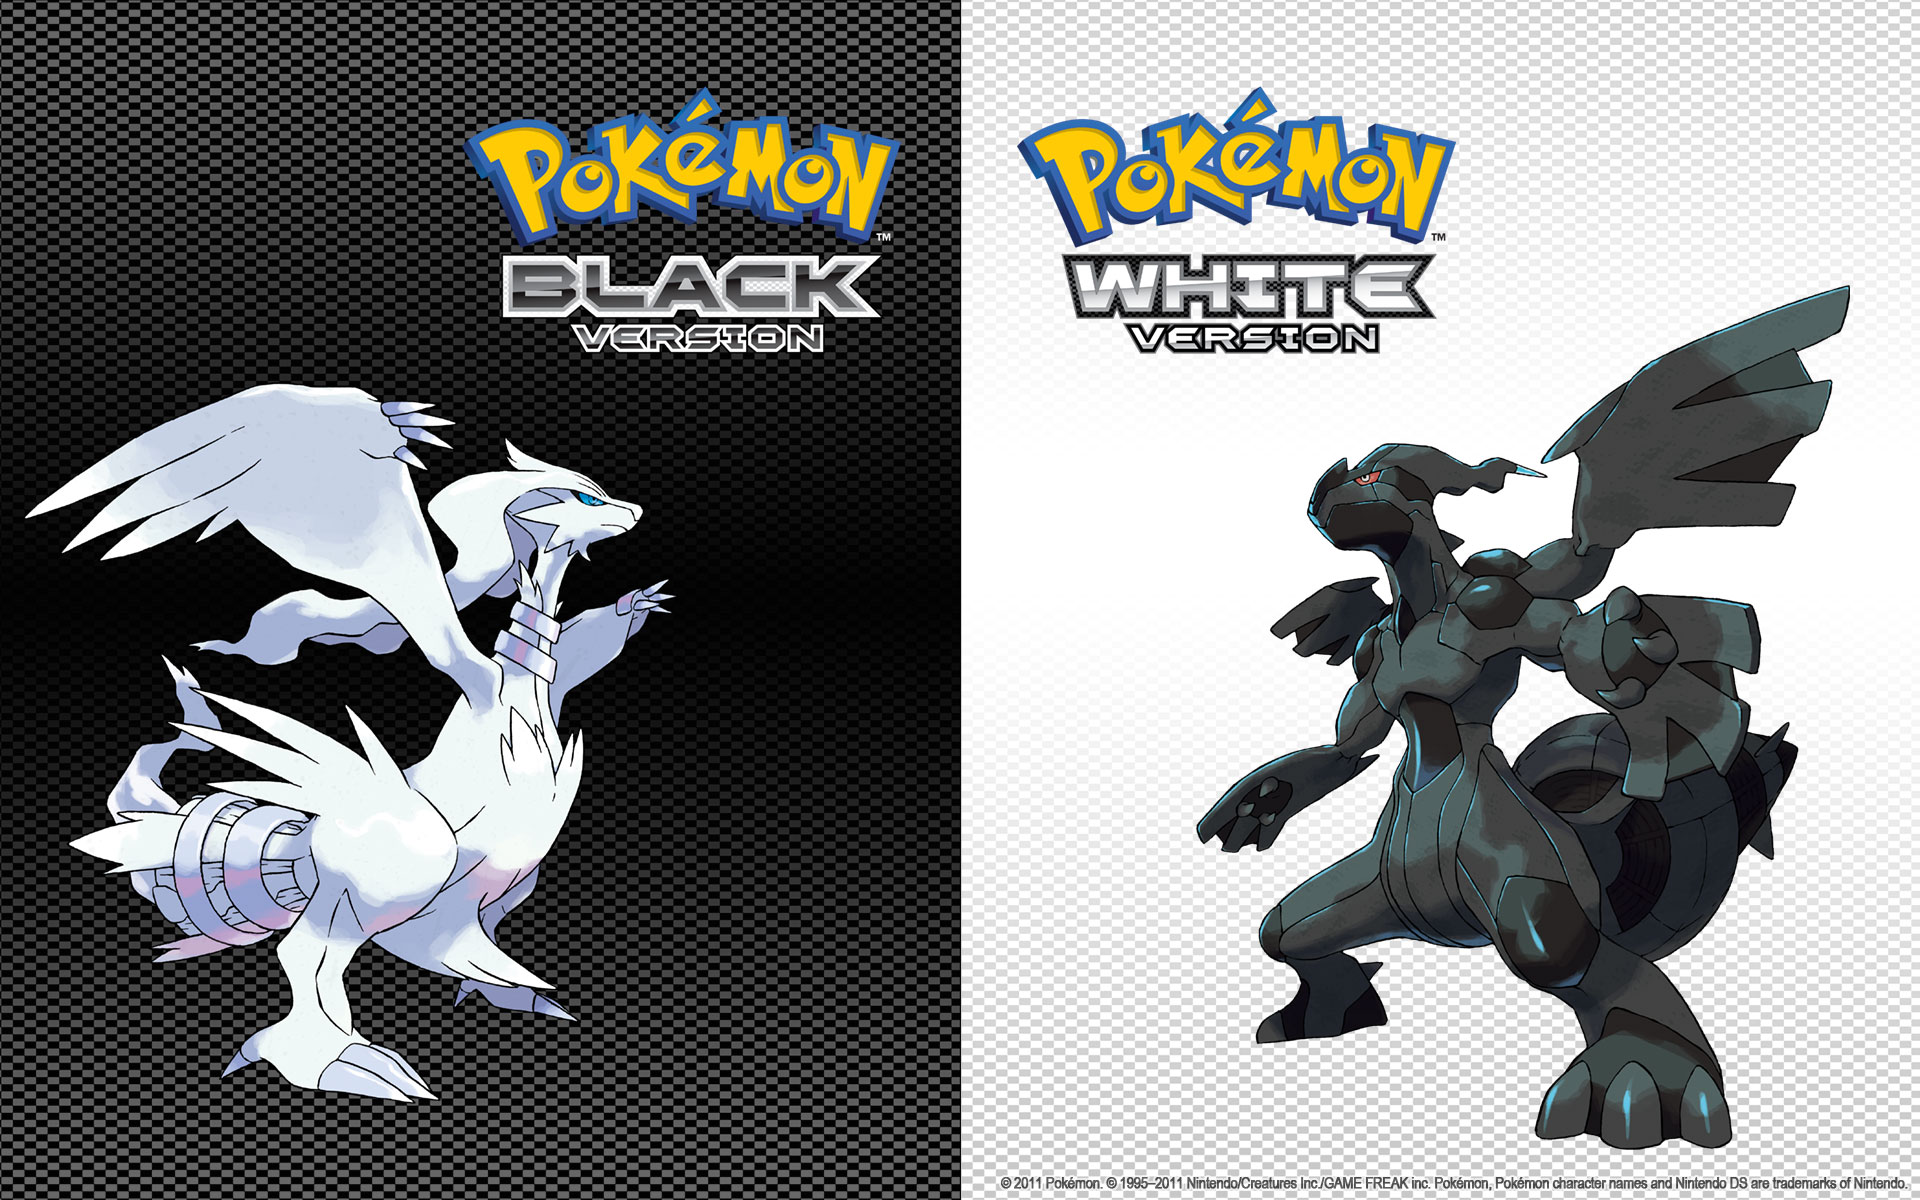 video game, pokemon: black and white, legendary pokémon, reshiram (pokémon), zekrom (pokemon), pokémon